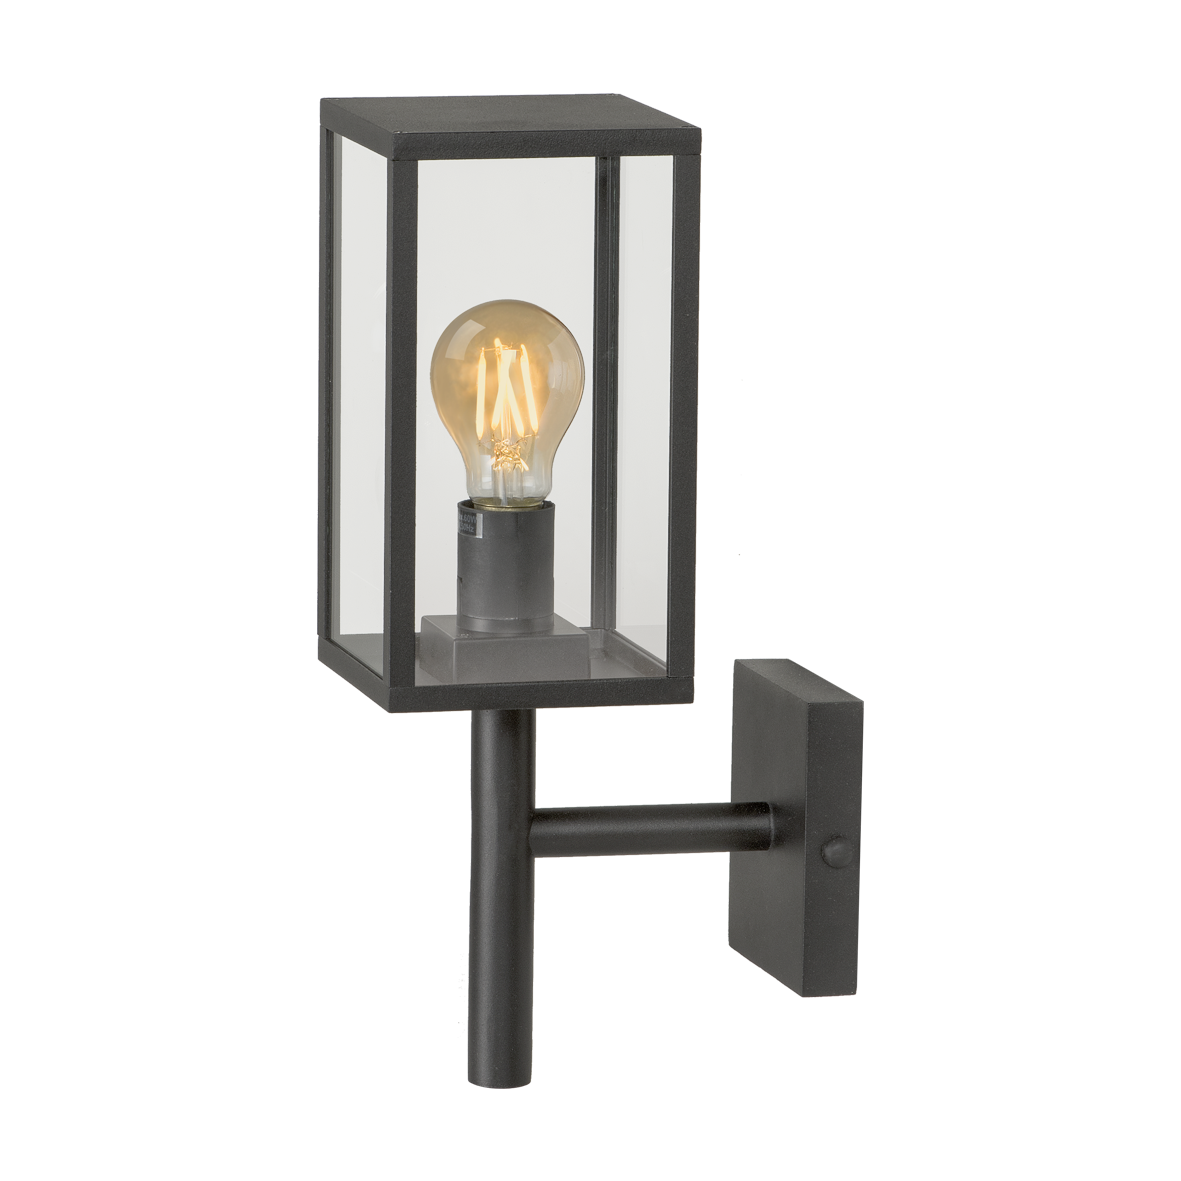 REGULUS Wandlampe ALU schwarz 120 x 380 mm. 12 Volt. Filament 4 Watt 280 lumen. warm weiß